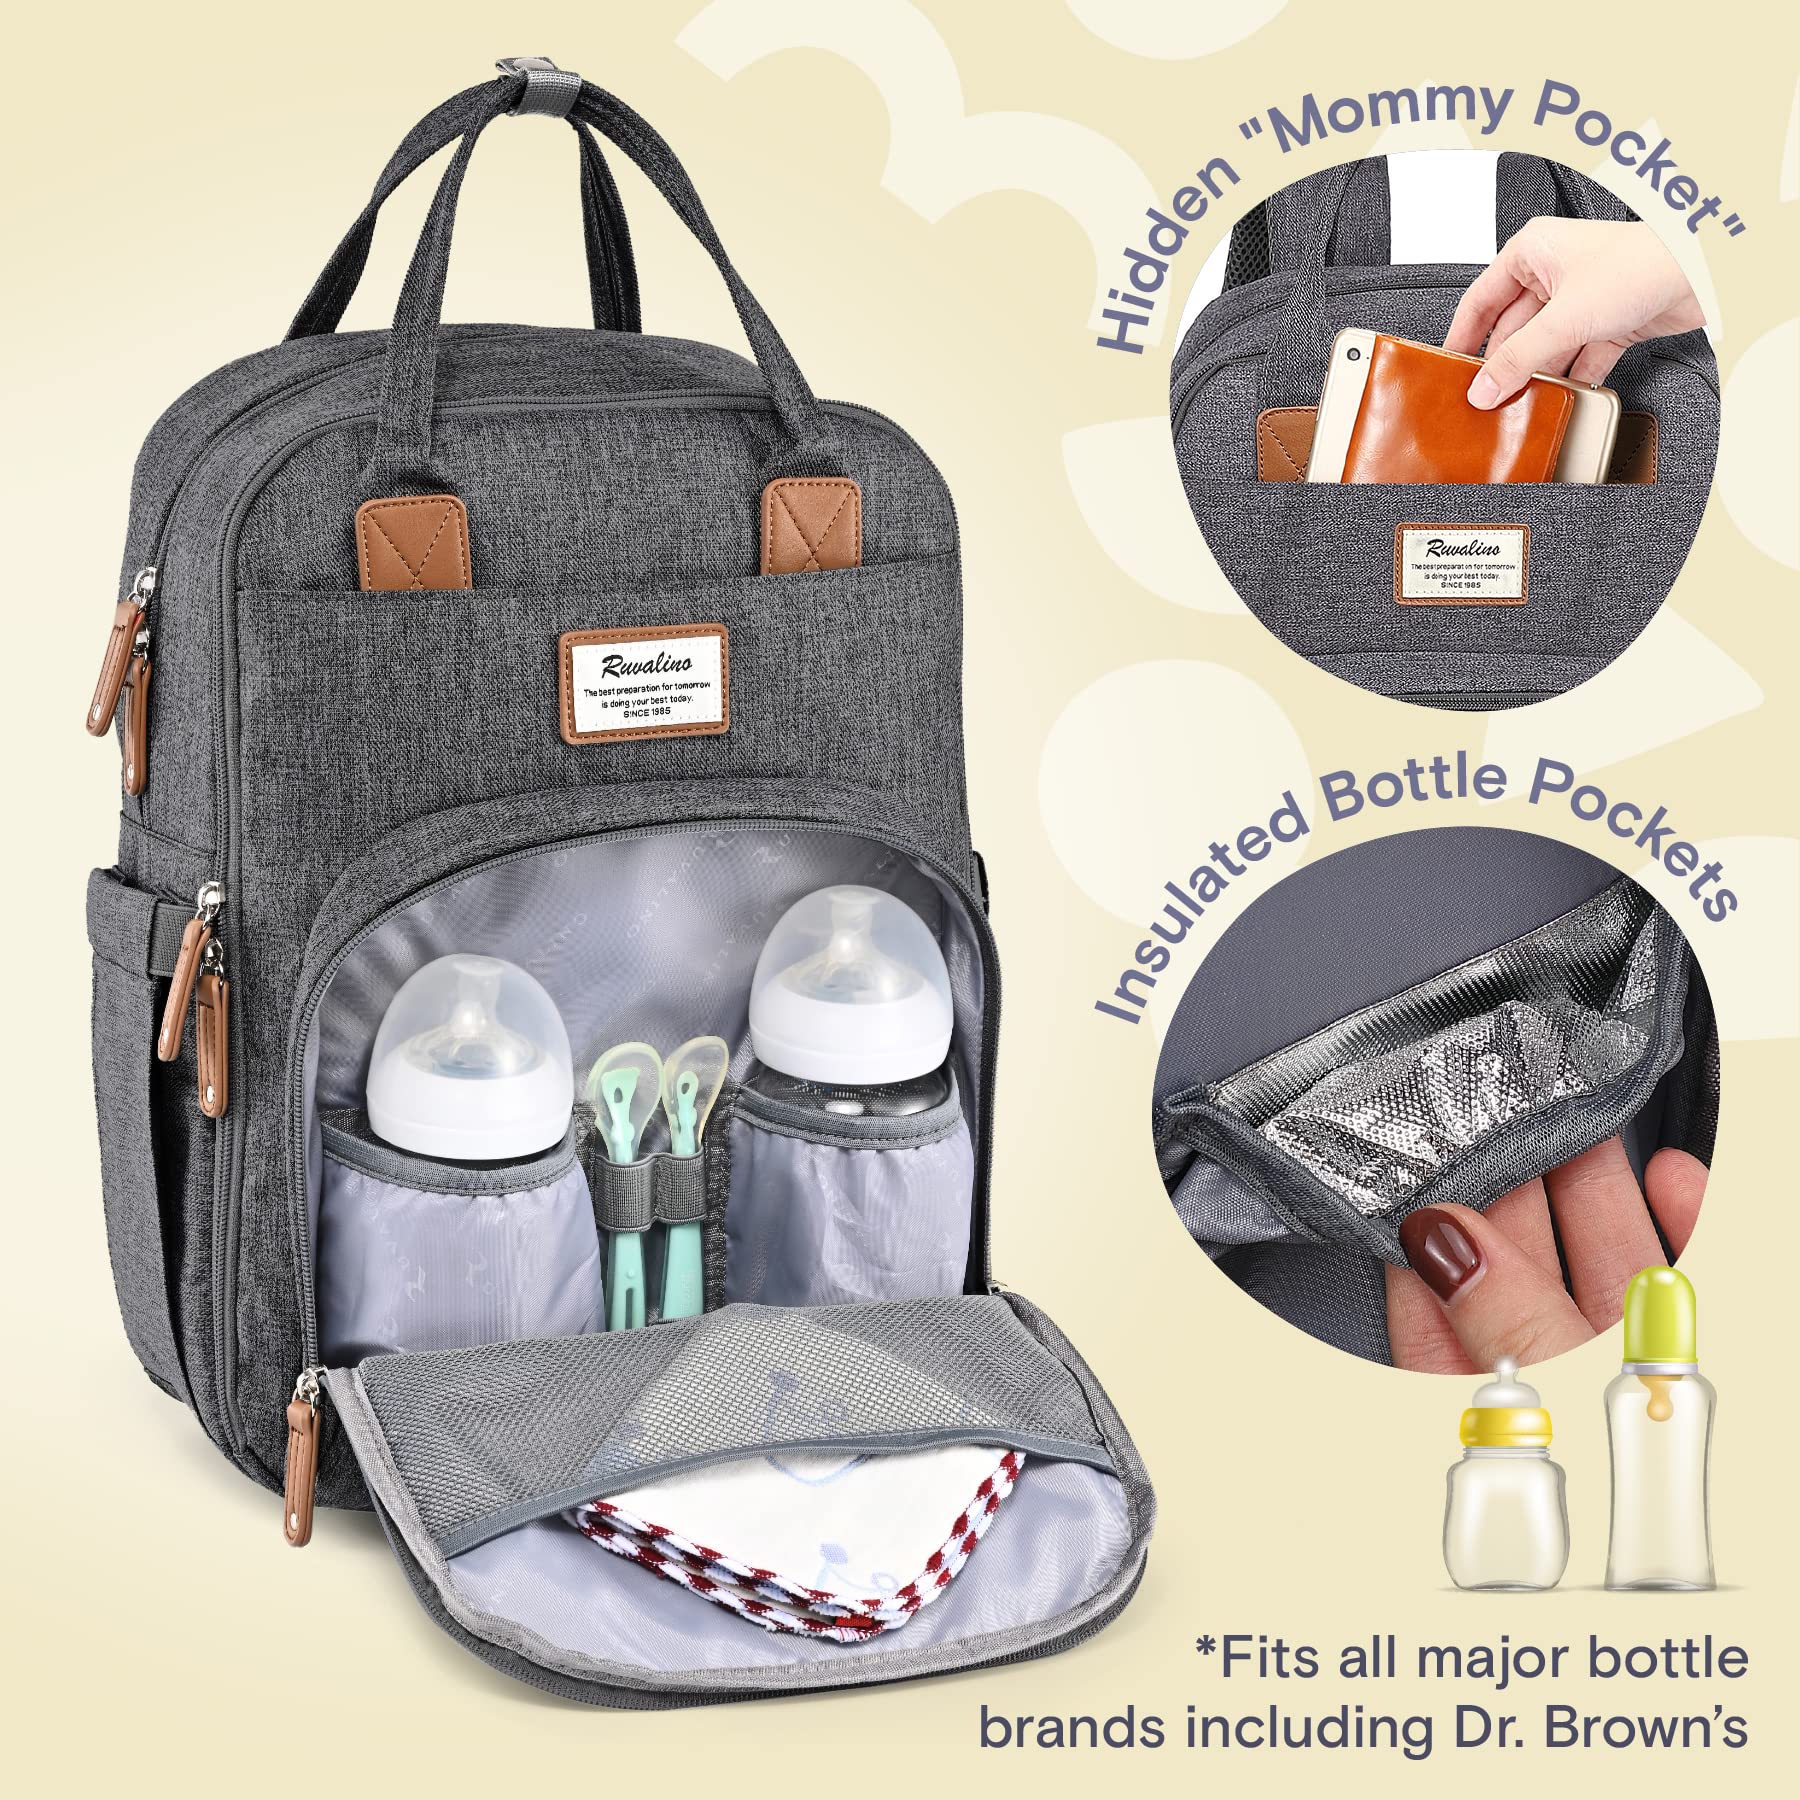 RUVALINO Diaper Bag Backpack, Multifunction Travel Back Pack Maternity Baby Changing Bags, Large Capacity, Waterproof and Stylish, Dark Gray